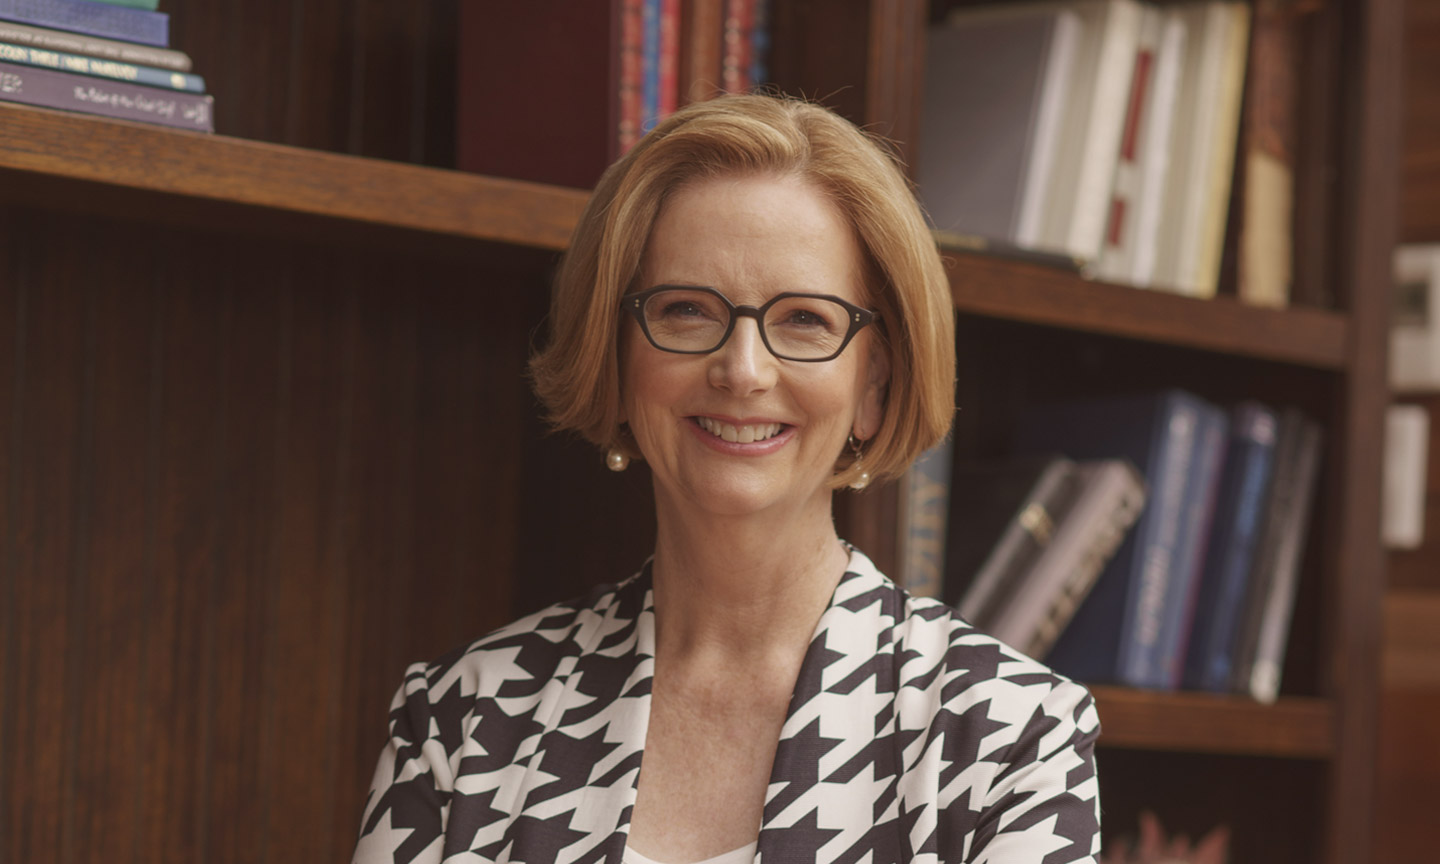 Julia Gillard in front of bookshelves